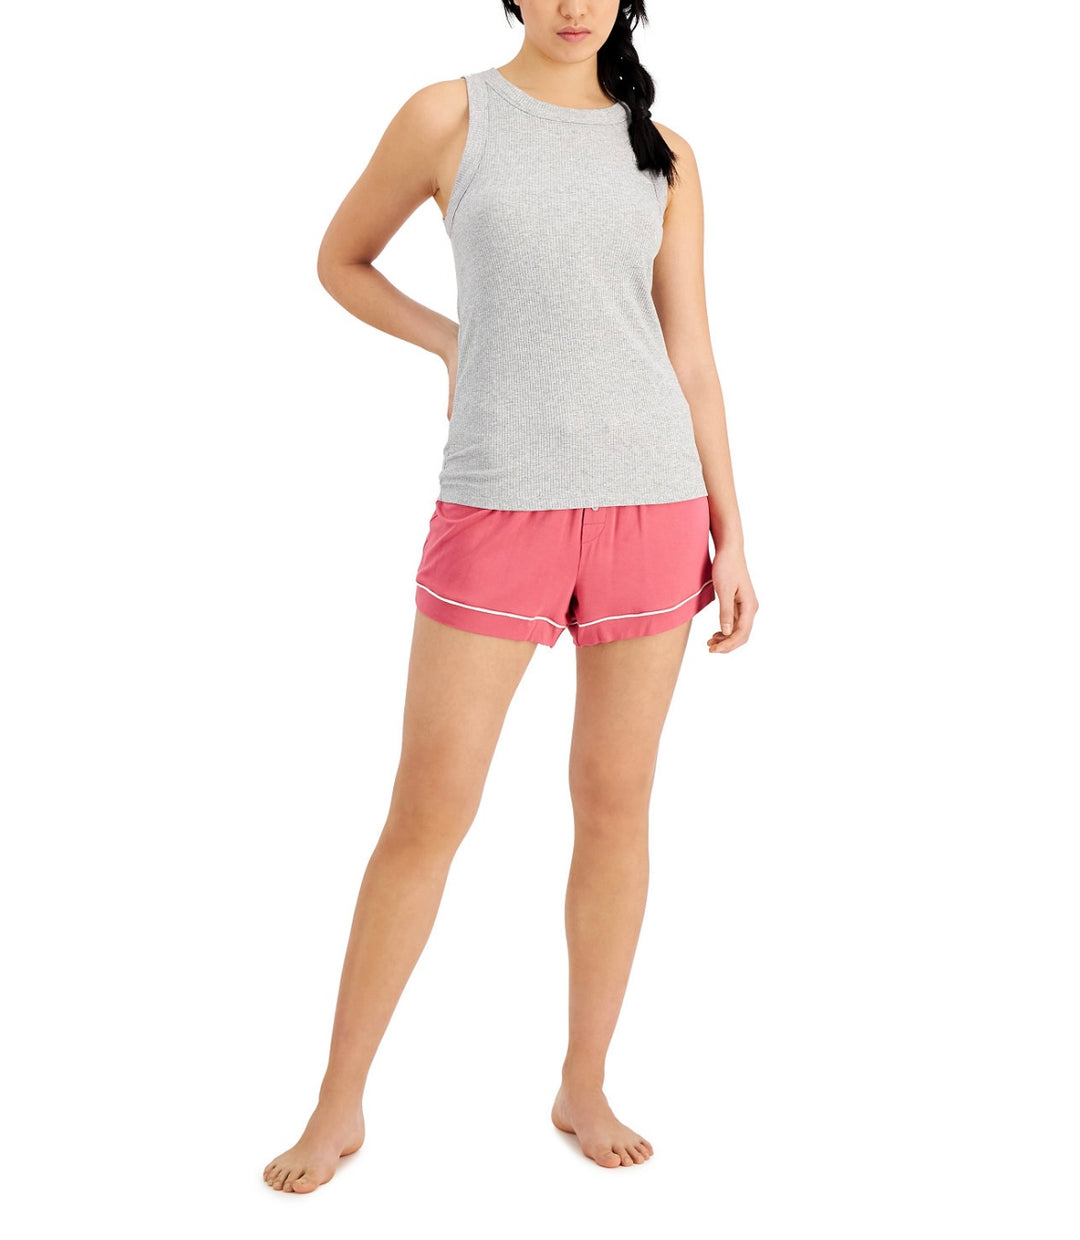 Jenni Women's High-Neck Pajama Tank Top Sleep Grey Heather Size XS